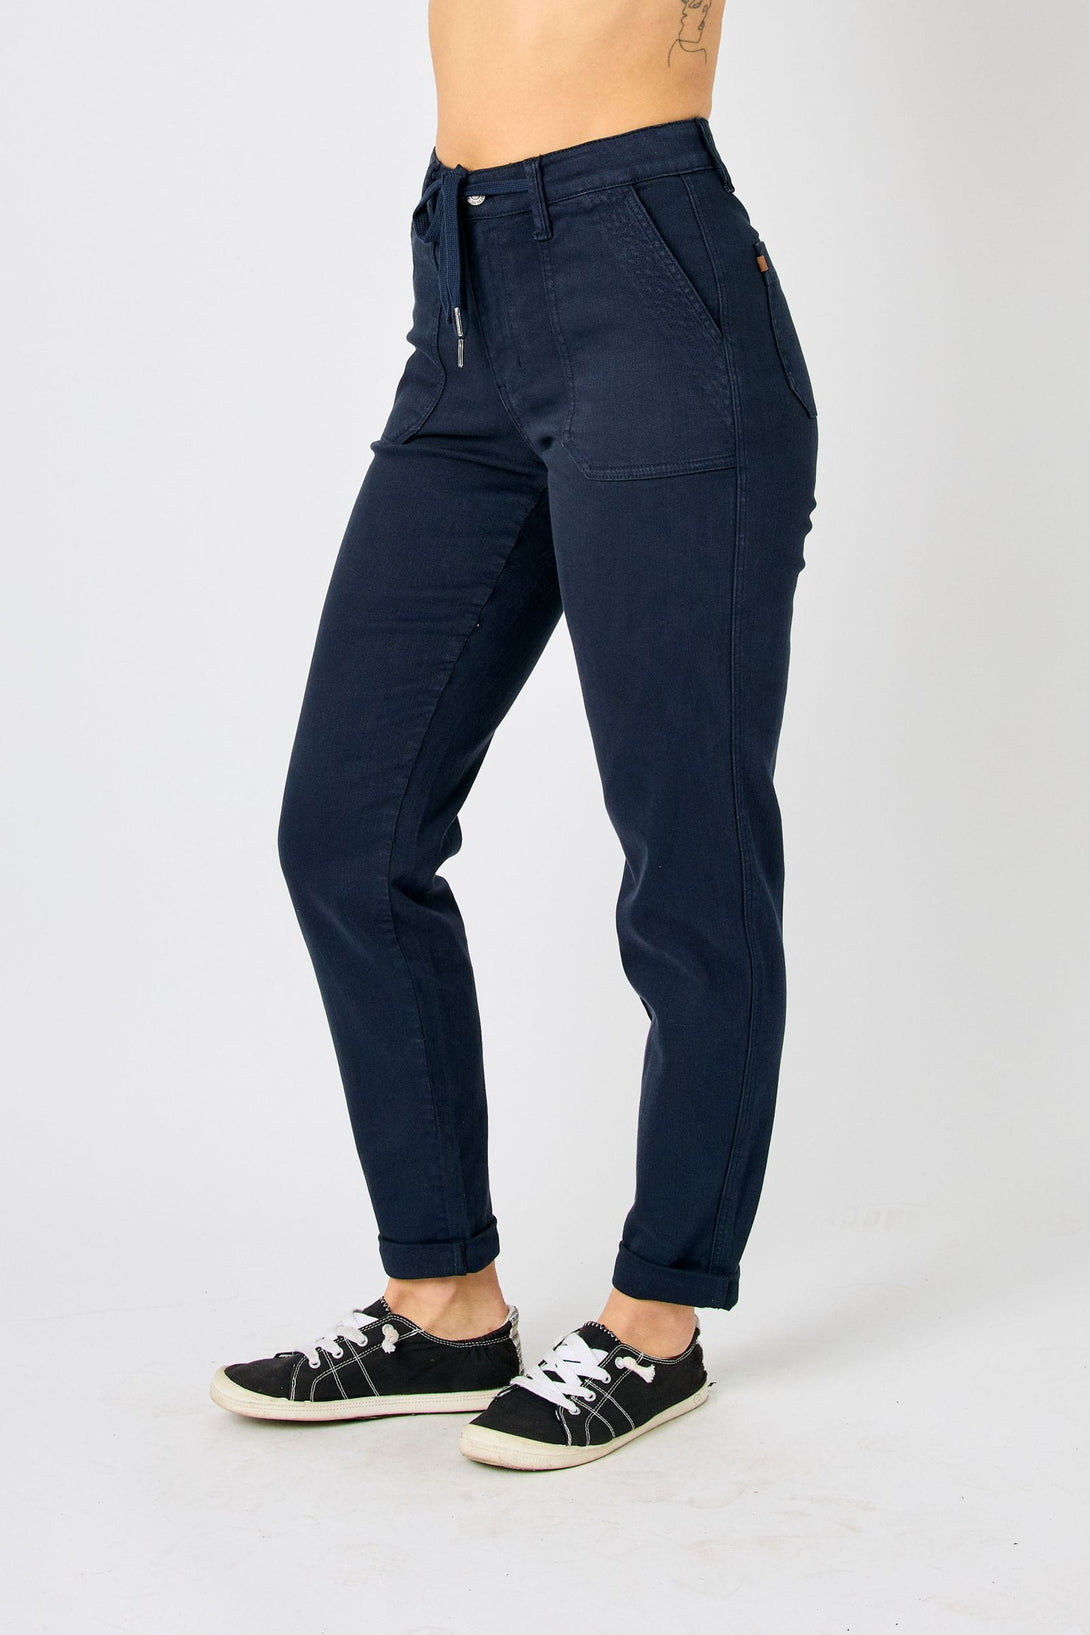 Judy Blue High Waist Garment Dyed Cuffed Jogger Style Jeans